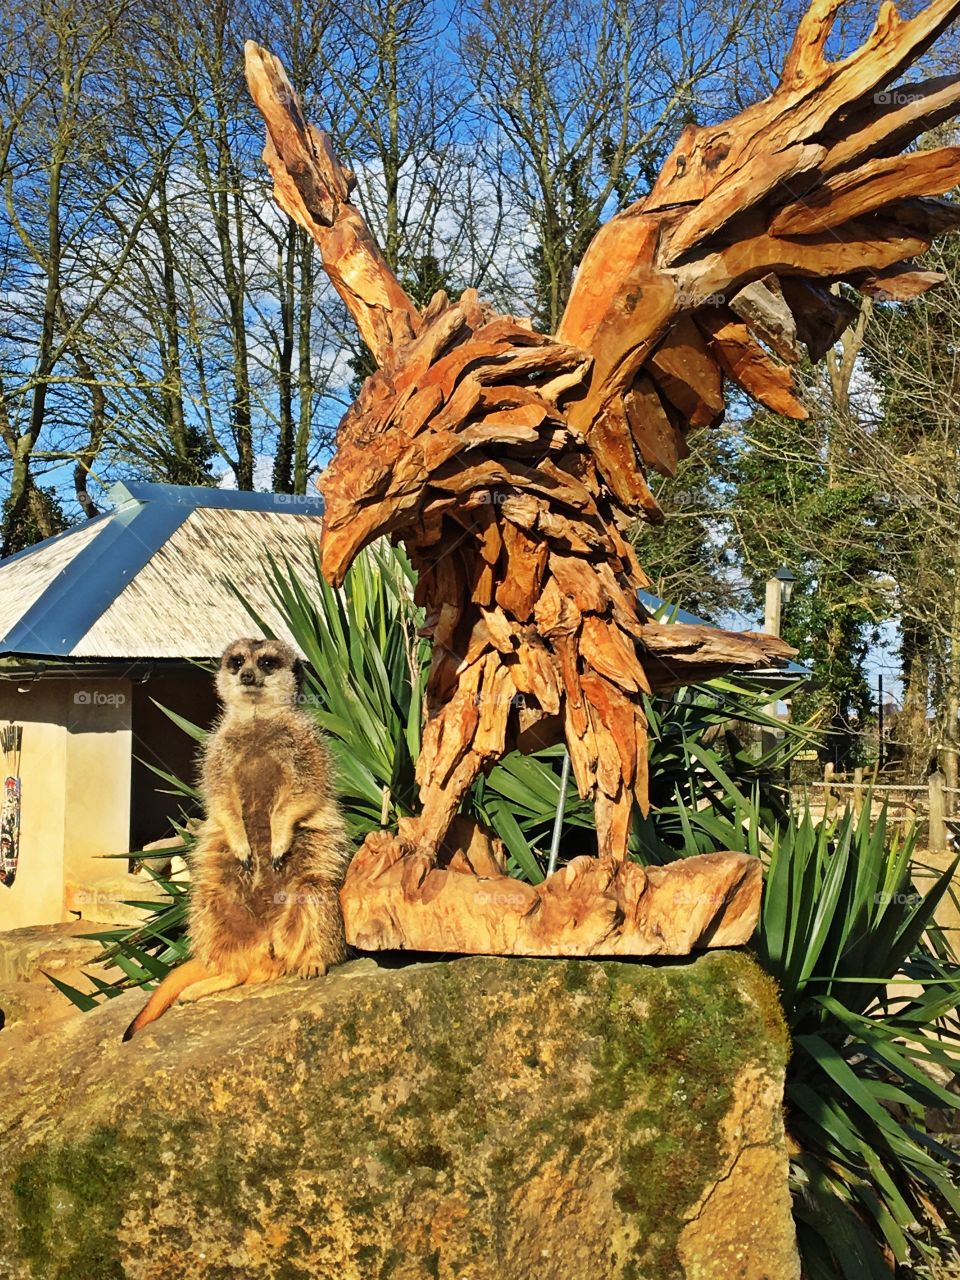 Brave meerkat sunbathing with an eagle sculpture 